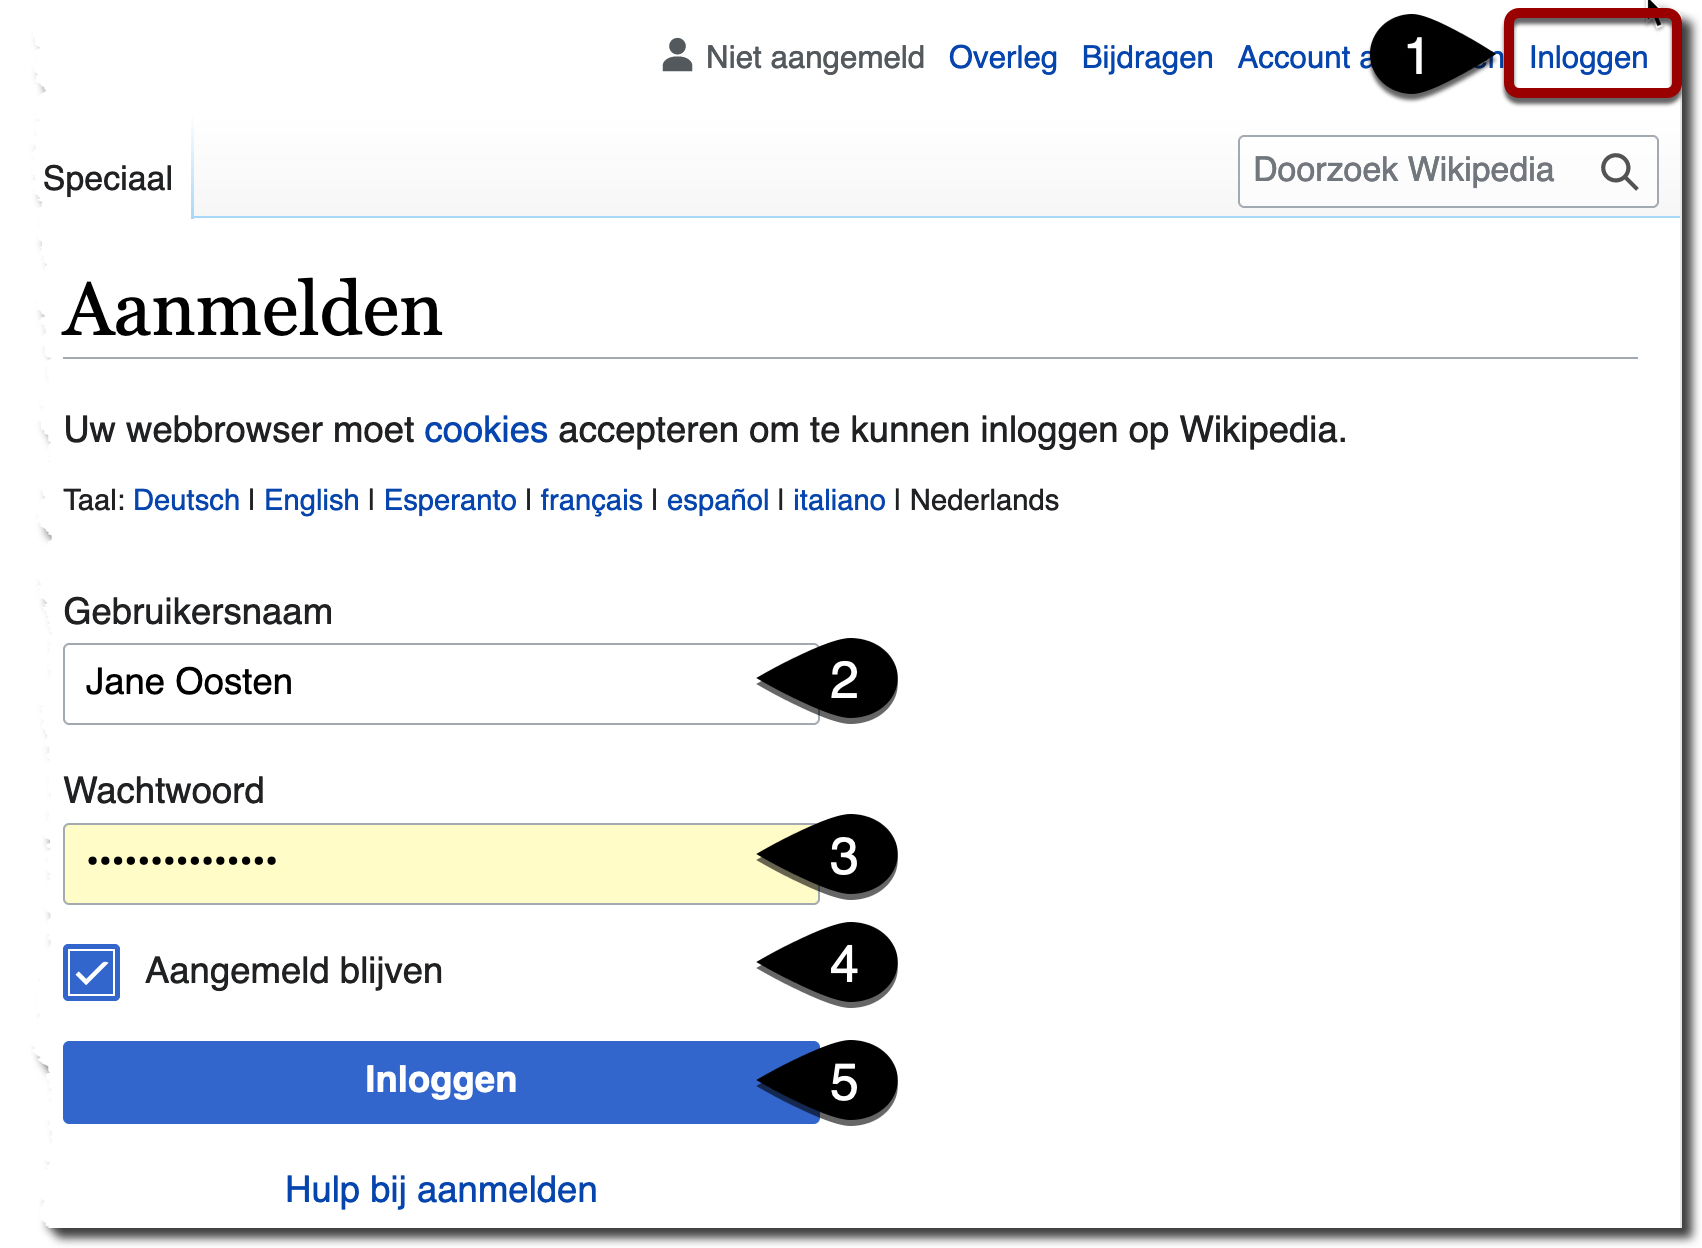 de verschillende stappen om in te loggen op Wikipedia. 